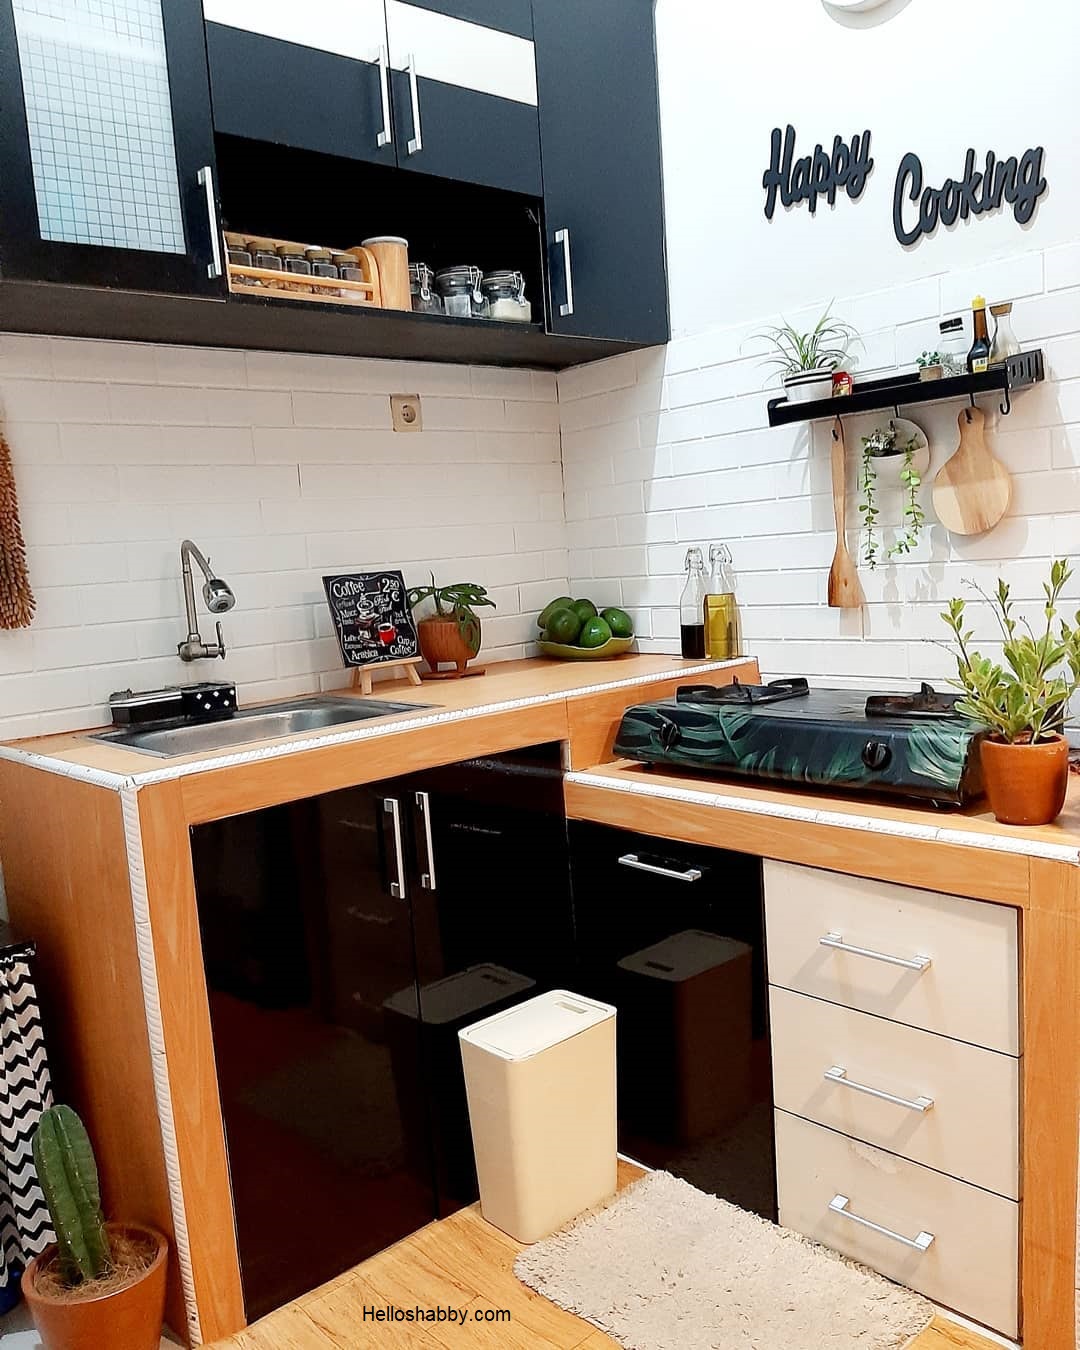 7 Desain Dapur Minimalis Dengan Kitchen Set Murah HelloShabbycom Interior And Exterior Solutions